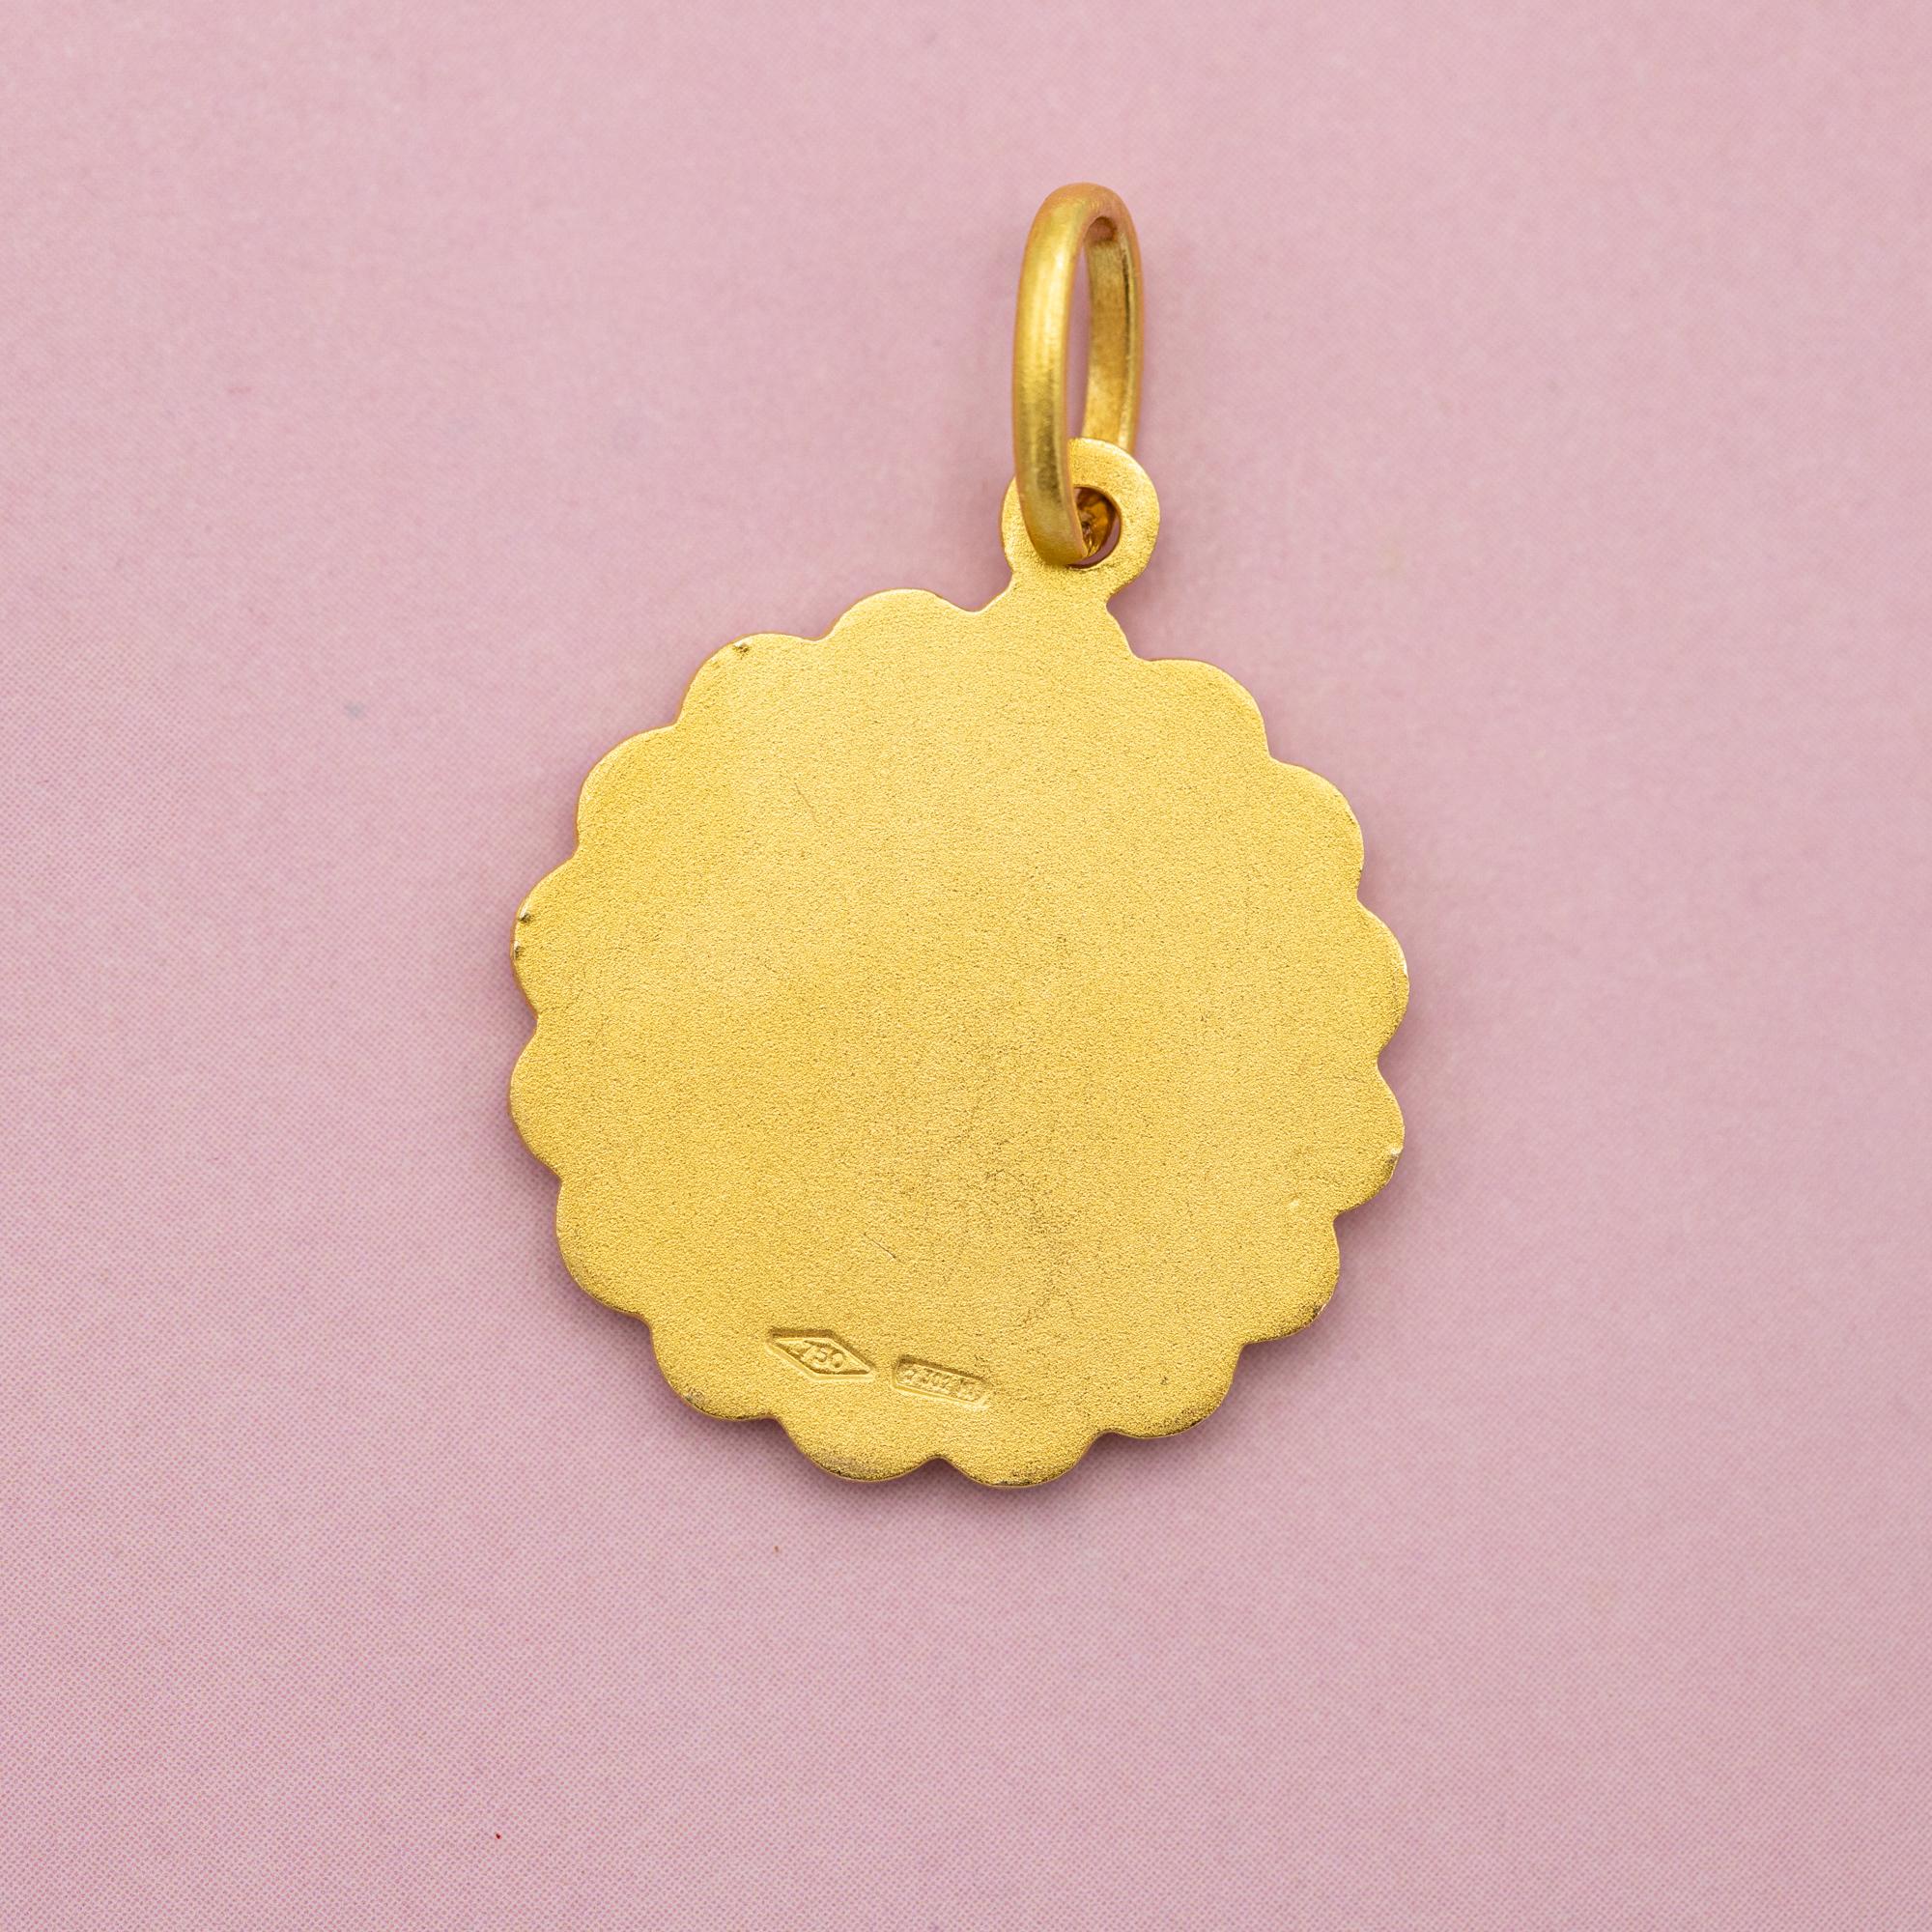 Modern Vintage 18 k Italian zodiac charm pendant - Aquarius charm - solid yellow gold